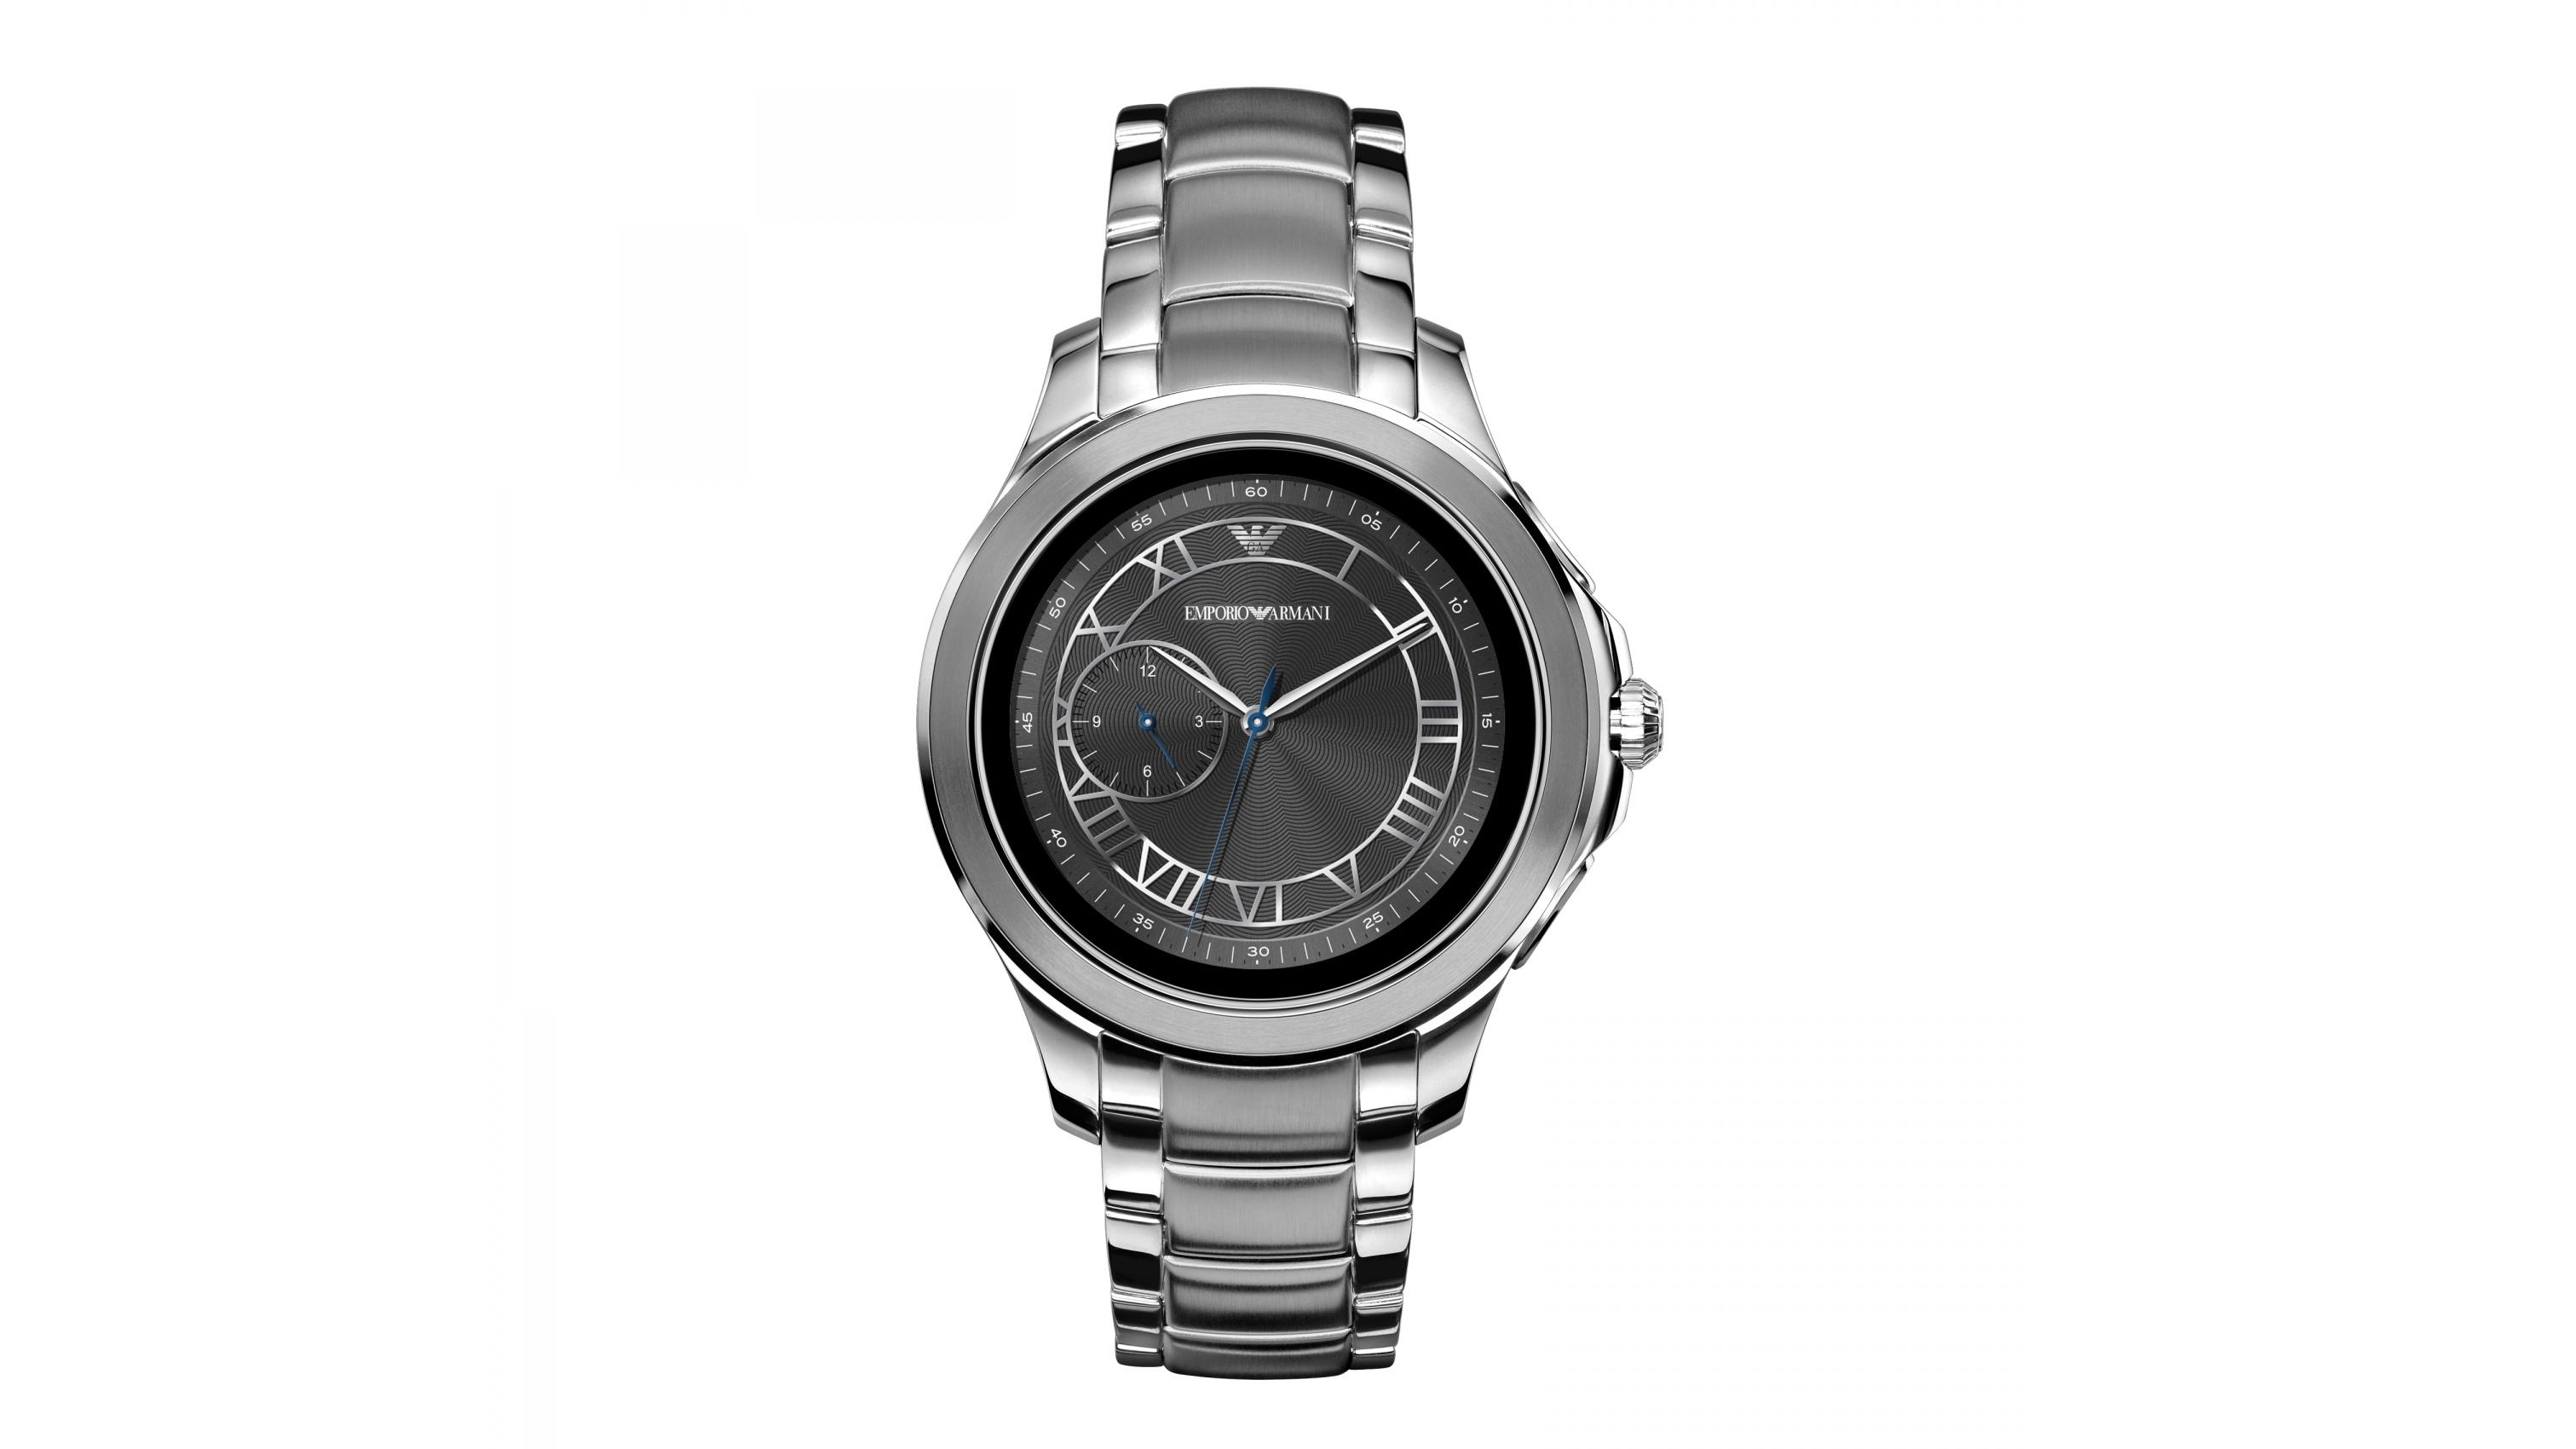 armani smartwatch silver